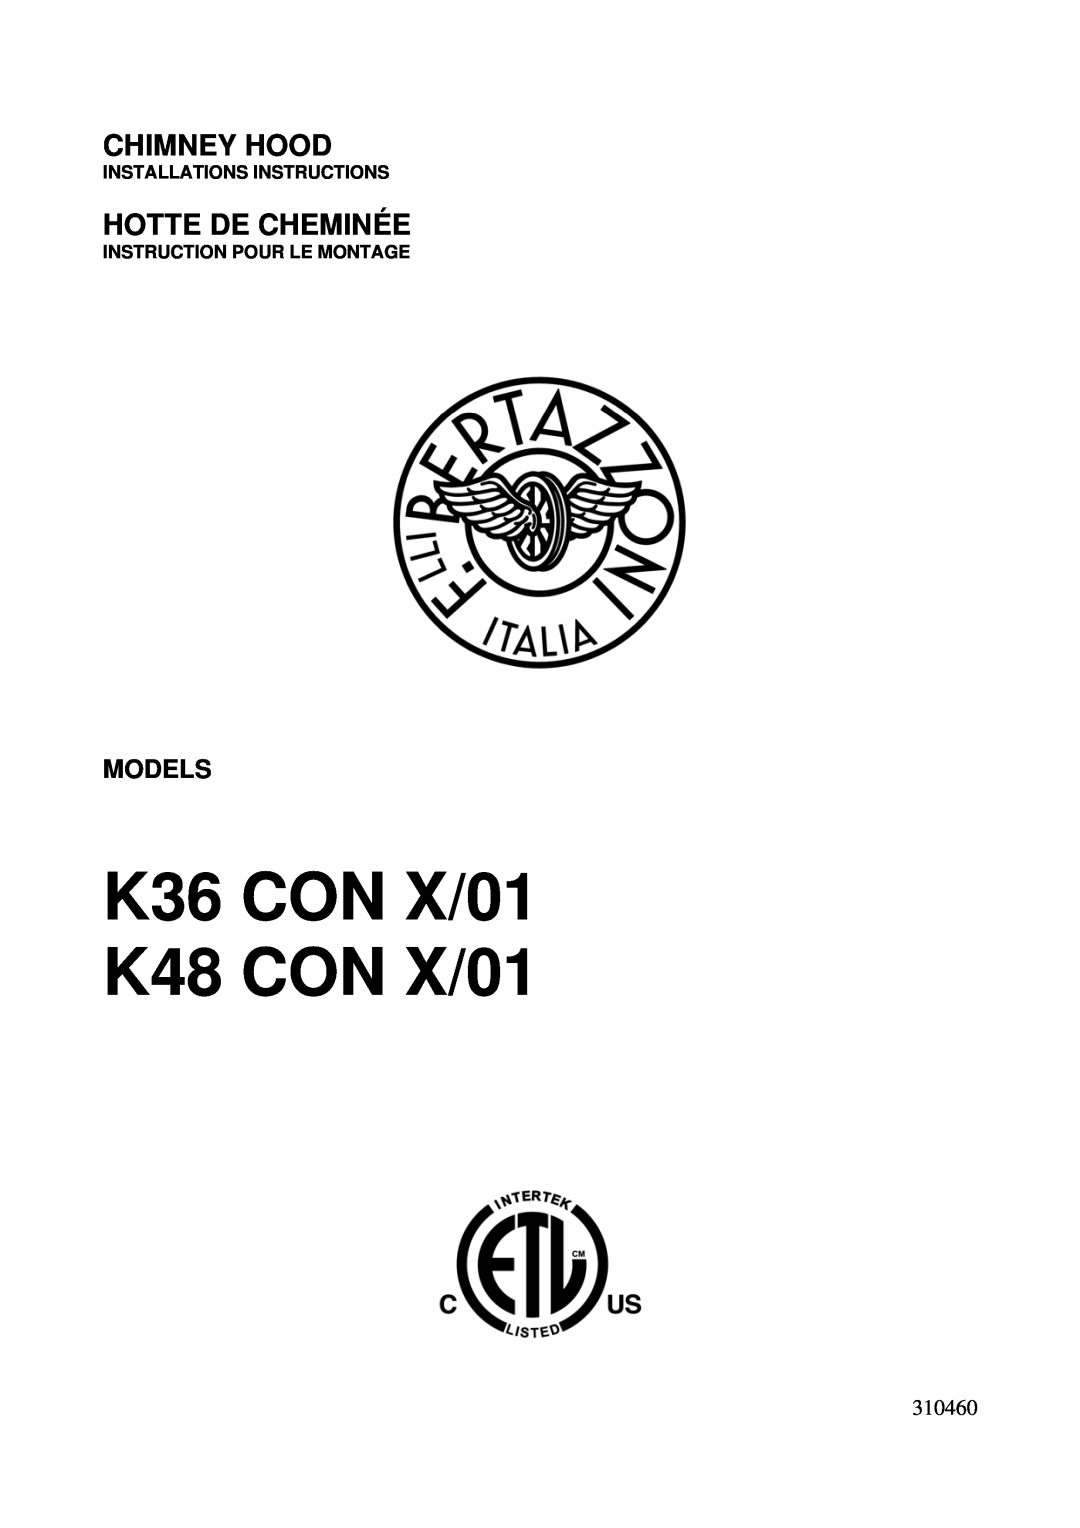 Bertazzoni manual 310460, Installations Instructions, Instruction Pour Le Montage, K36 CON X/01 K48 CON X/01, Models 